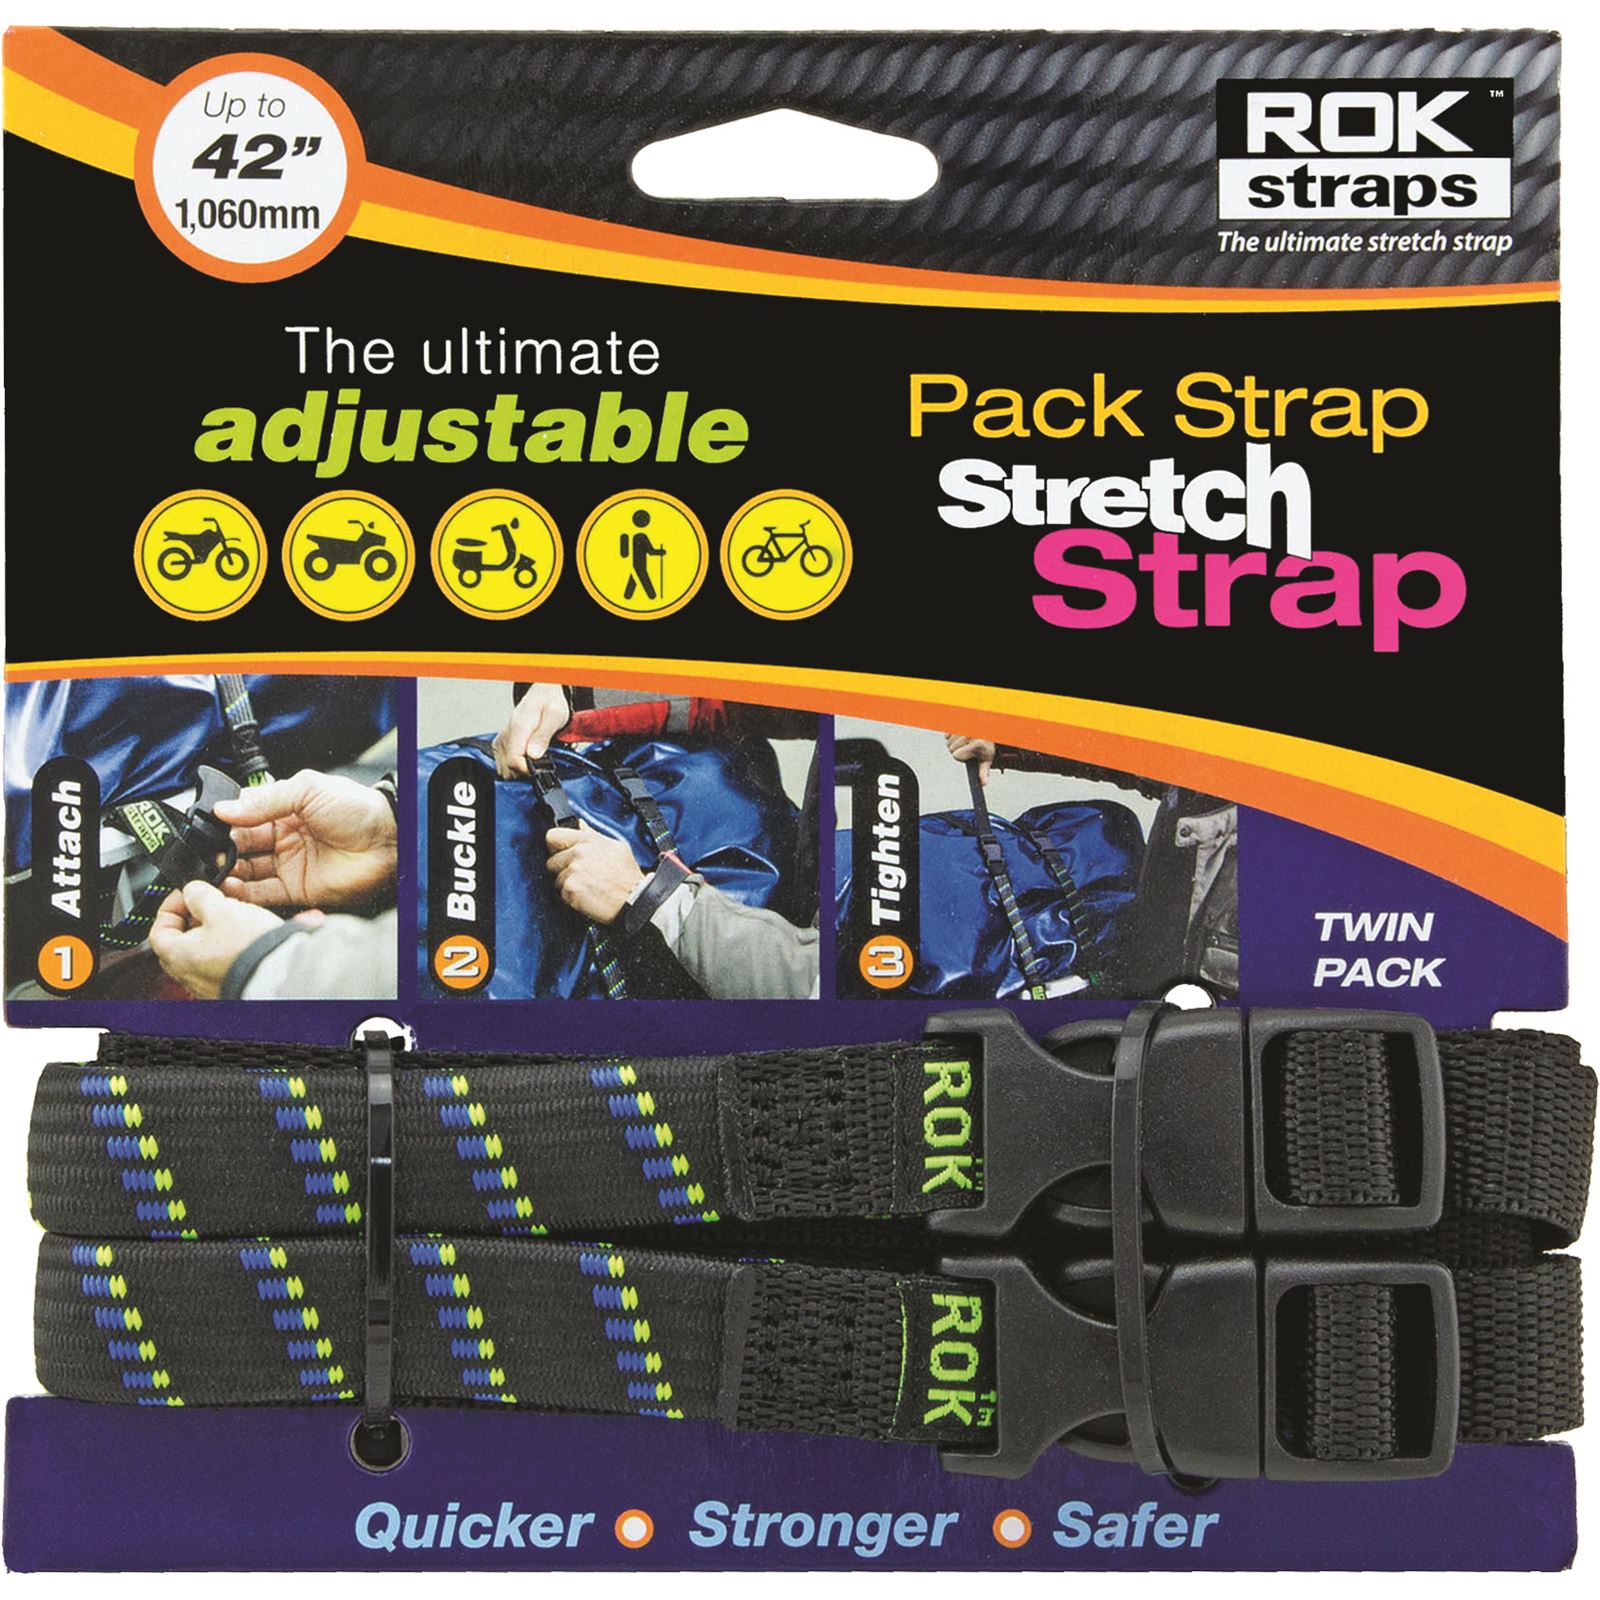 Rokstraps Pack Strap